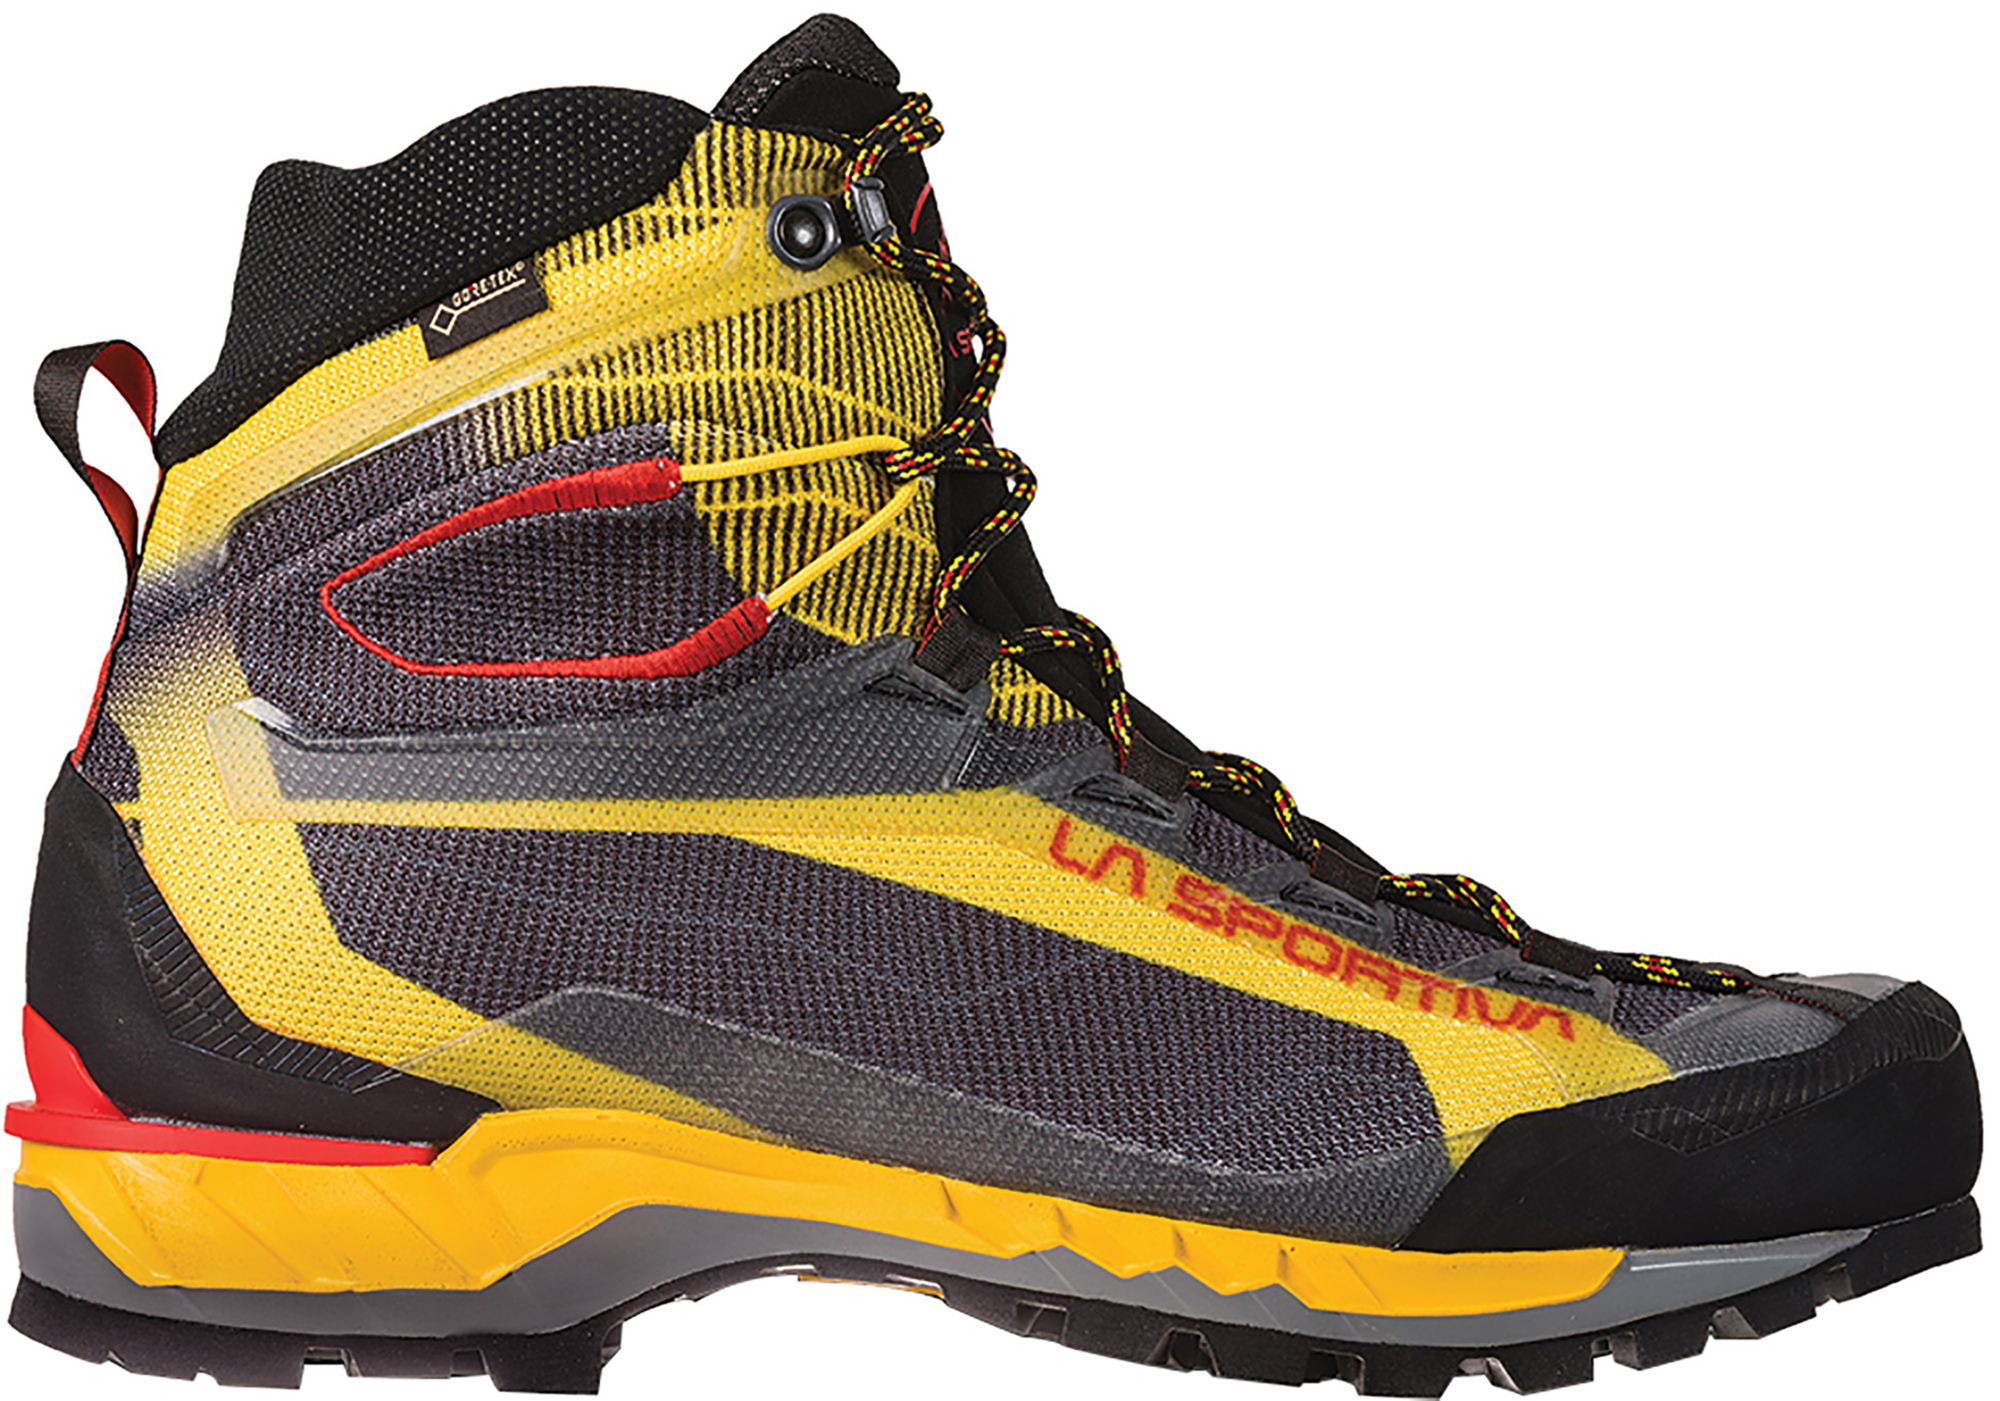 Photos - Trekking Shoes La Sportiva Men's Trango Tech GTX Hiking Boots, Size 42, Black/Yellow 21QP 